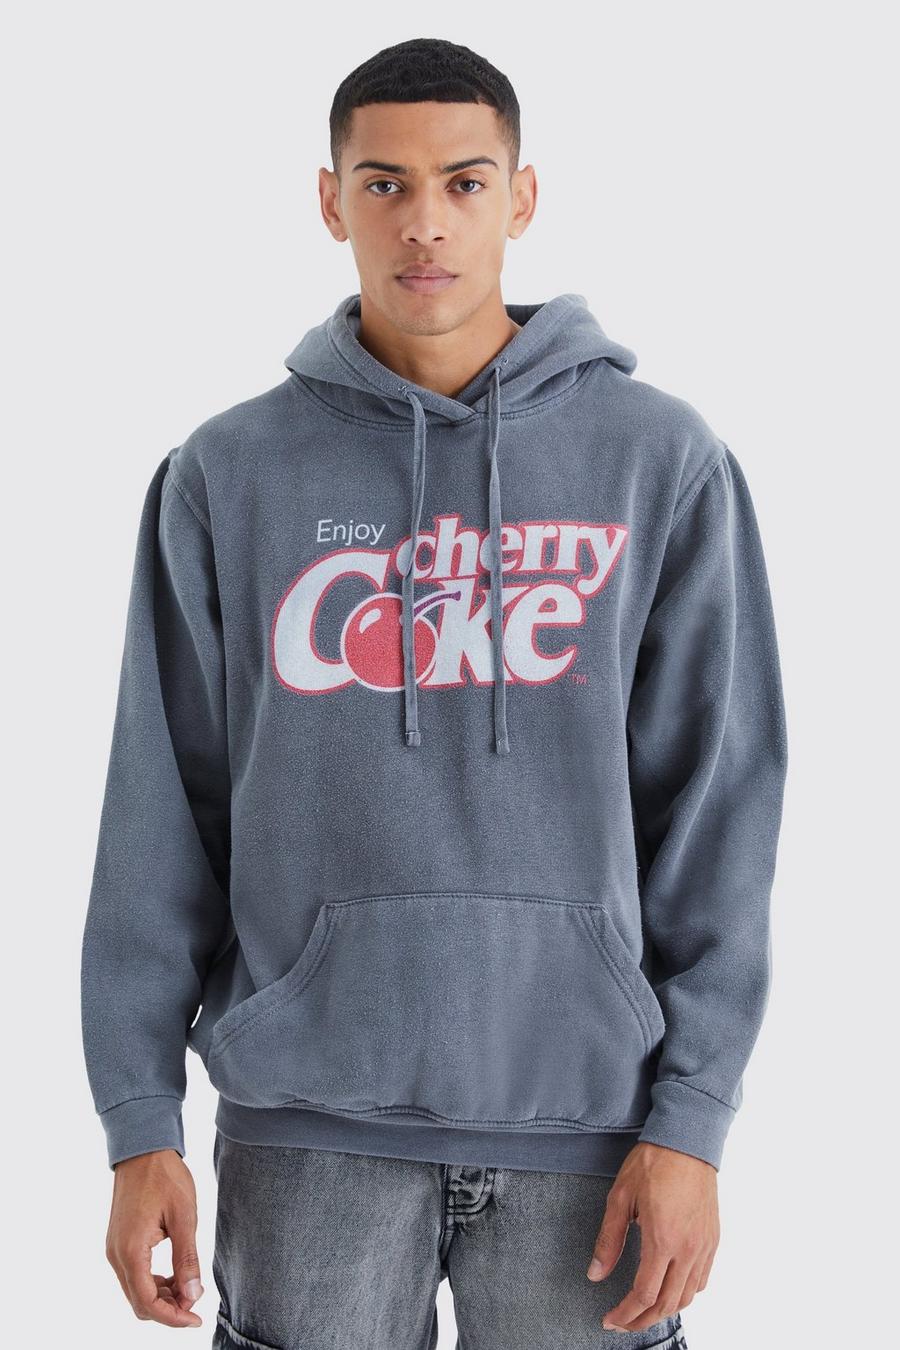 Charcoal grey Oversized Cherry Coke Wash License Hoodie